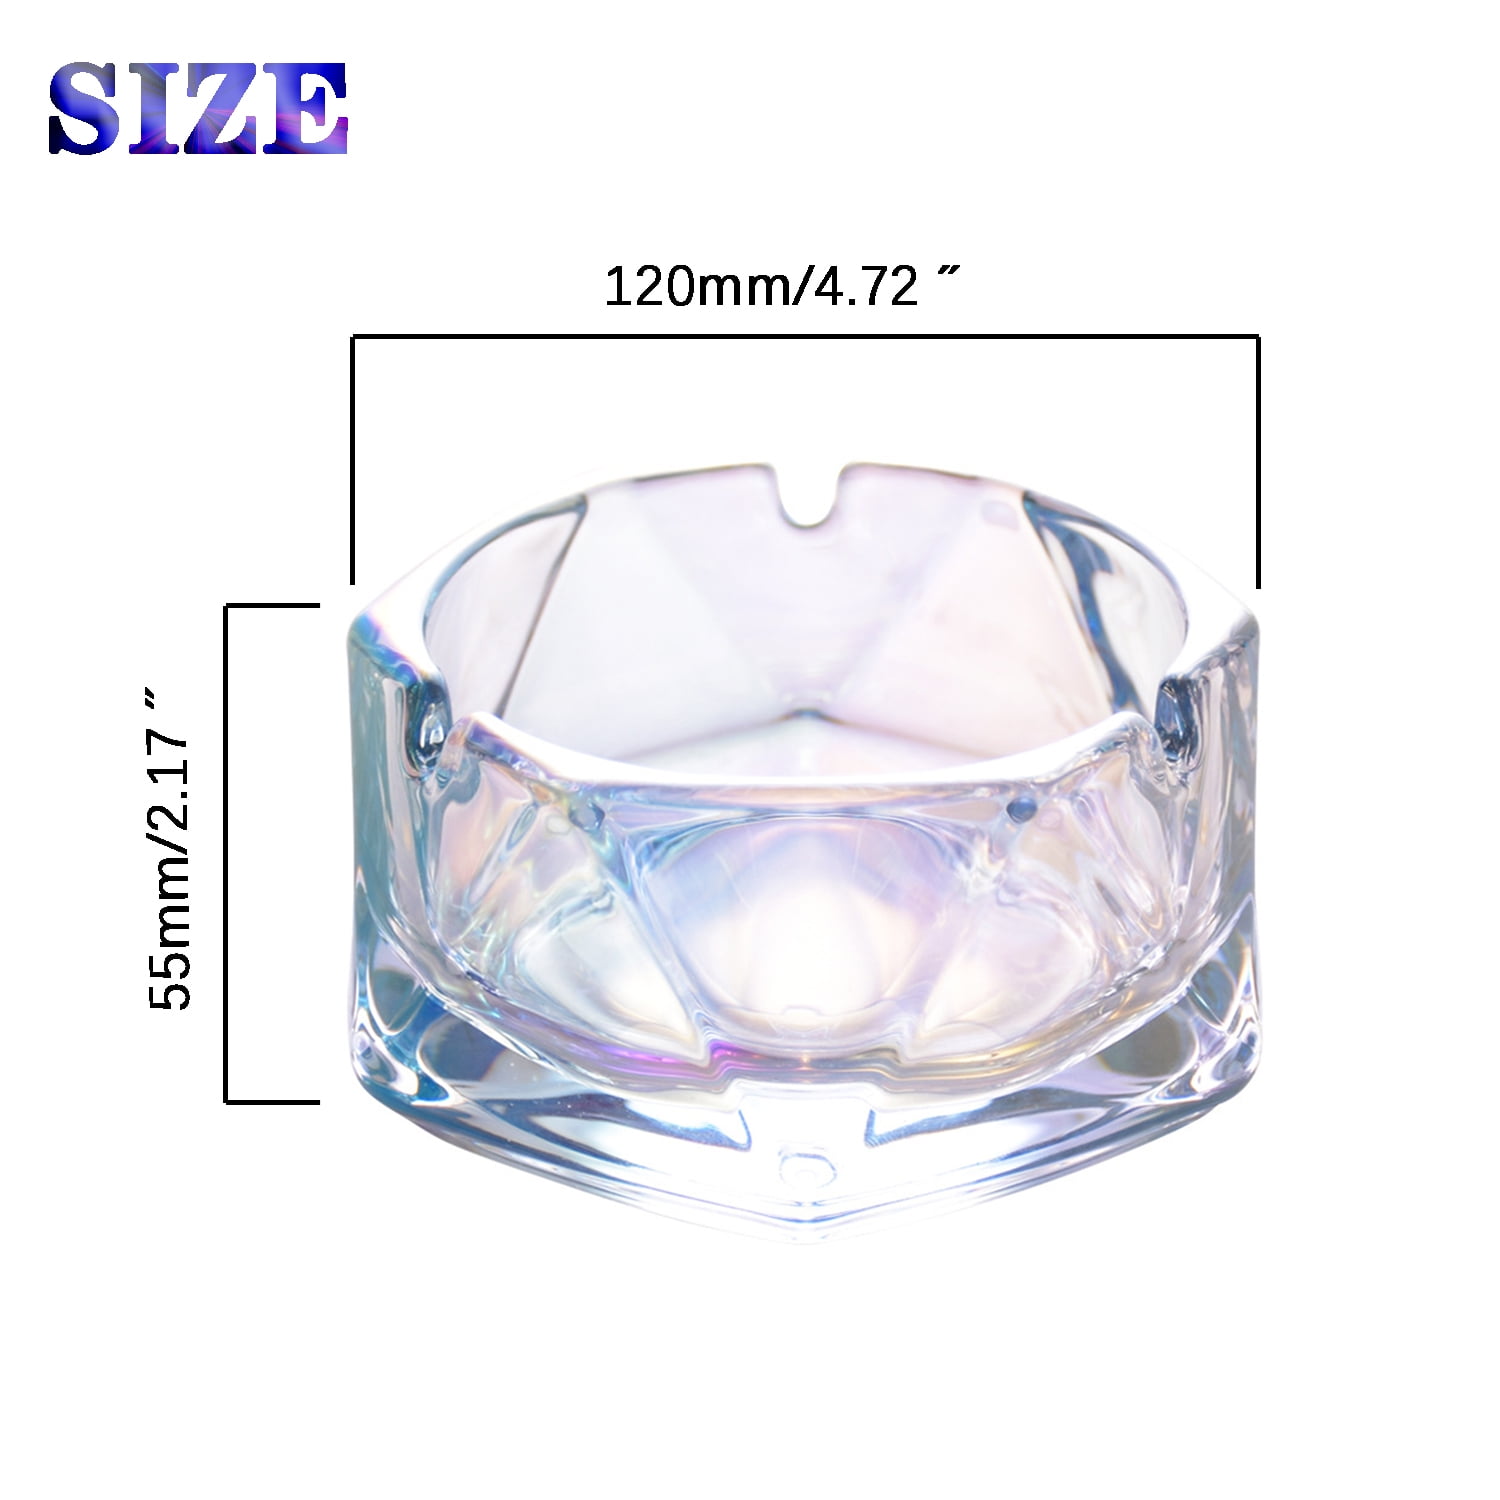 2x glass ashtray Lennart ash mug, round design, Ø 7 cm, transparent